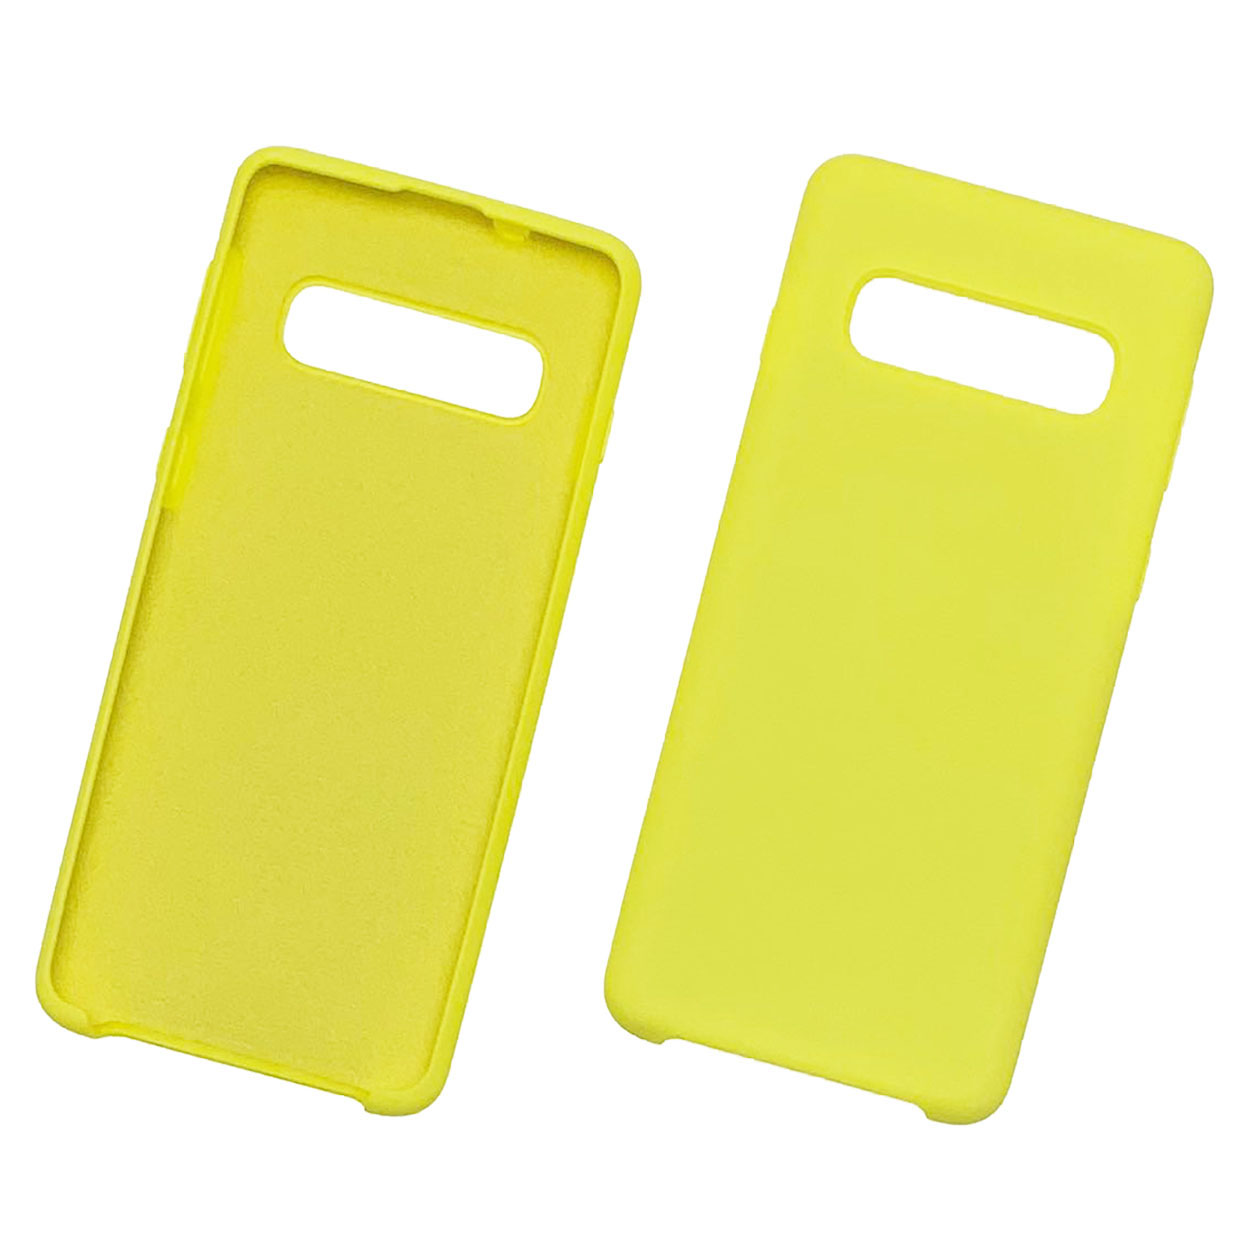 Чехол накладка Silicon Cover для SAMSUNG Galaxy S10 Plus (SM-G975), силикон, бархат, цвет желтый.